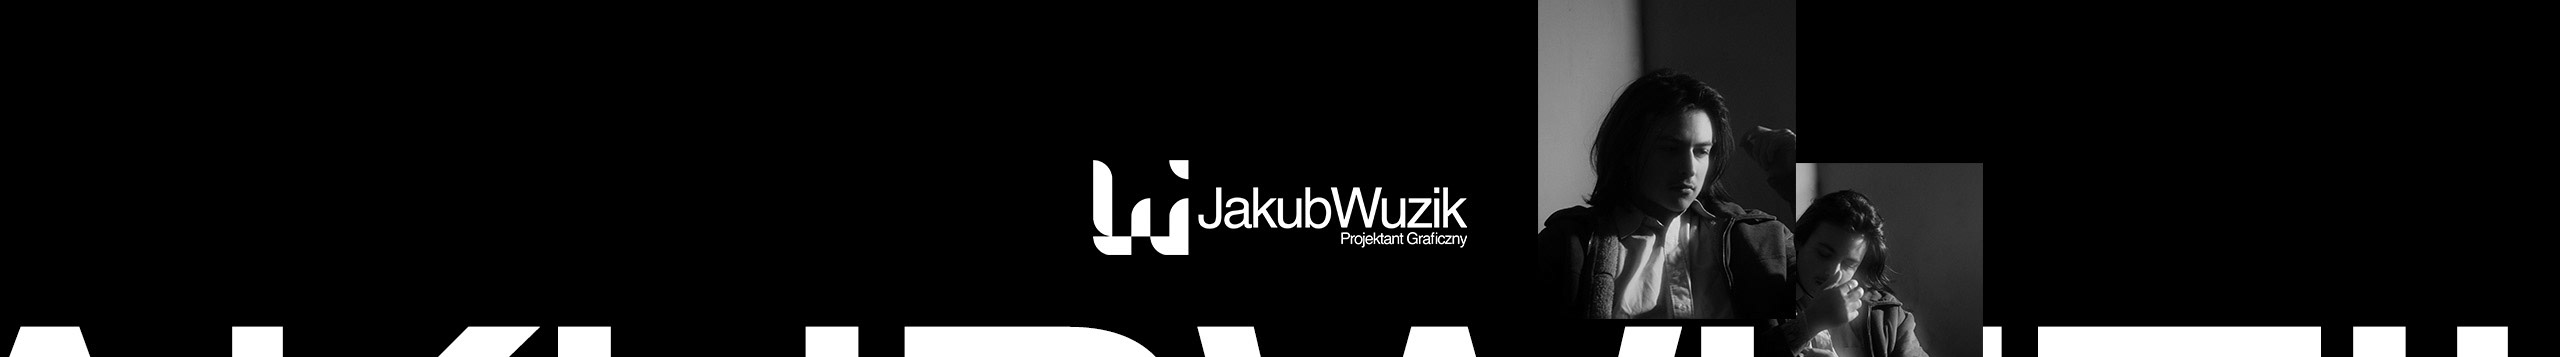 Bannière de profil de Jakub Wuzik